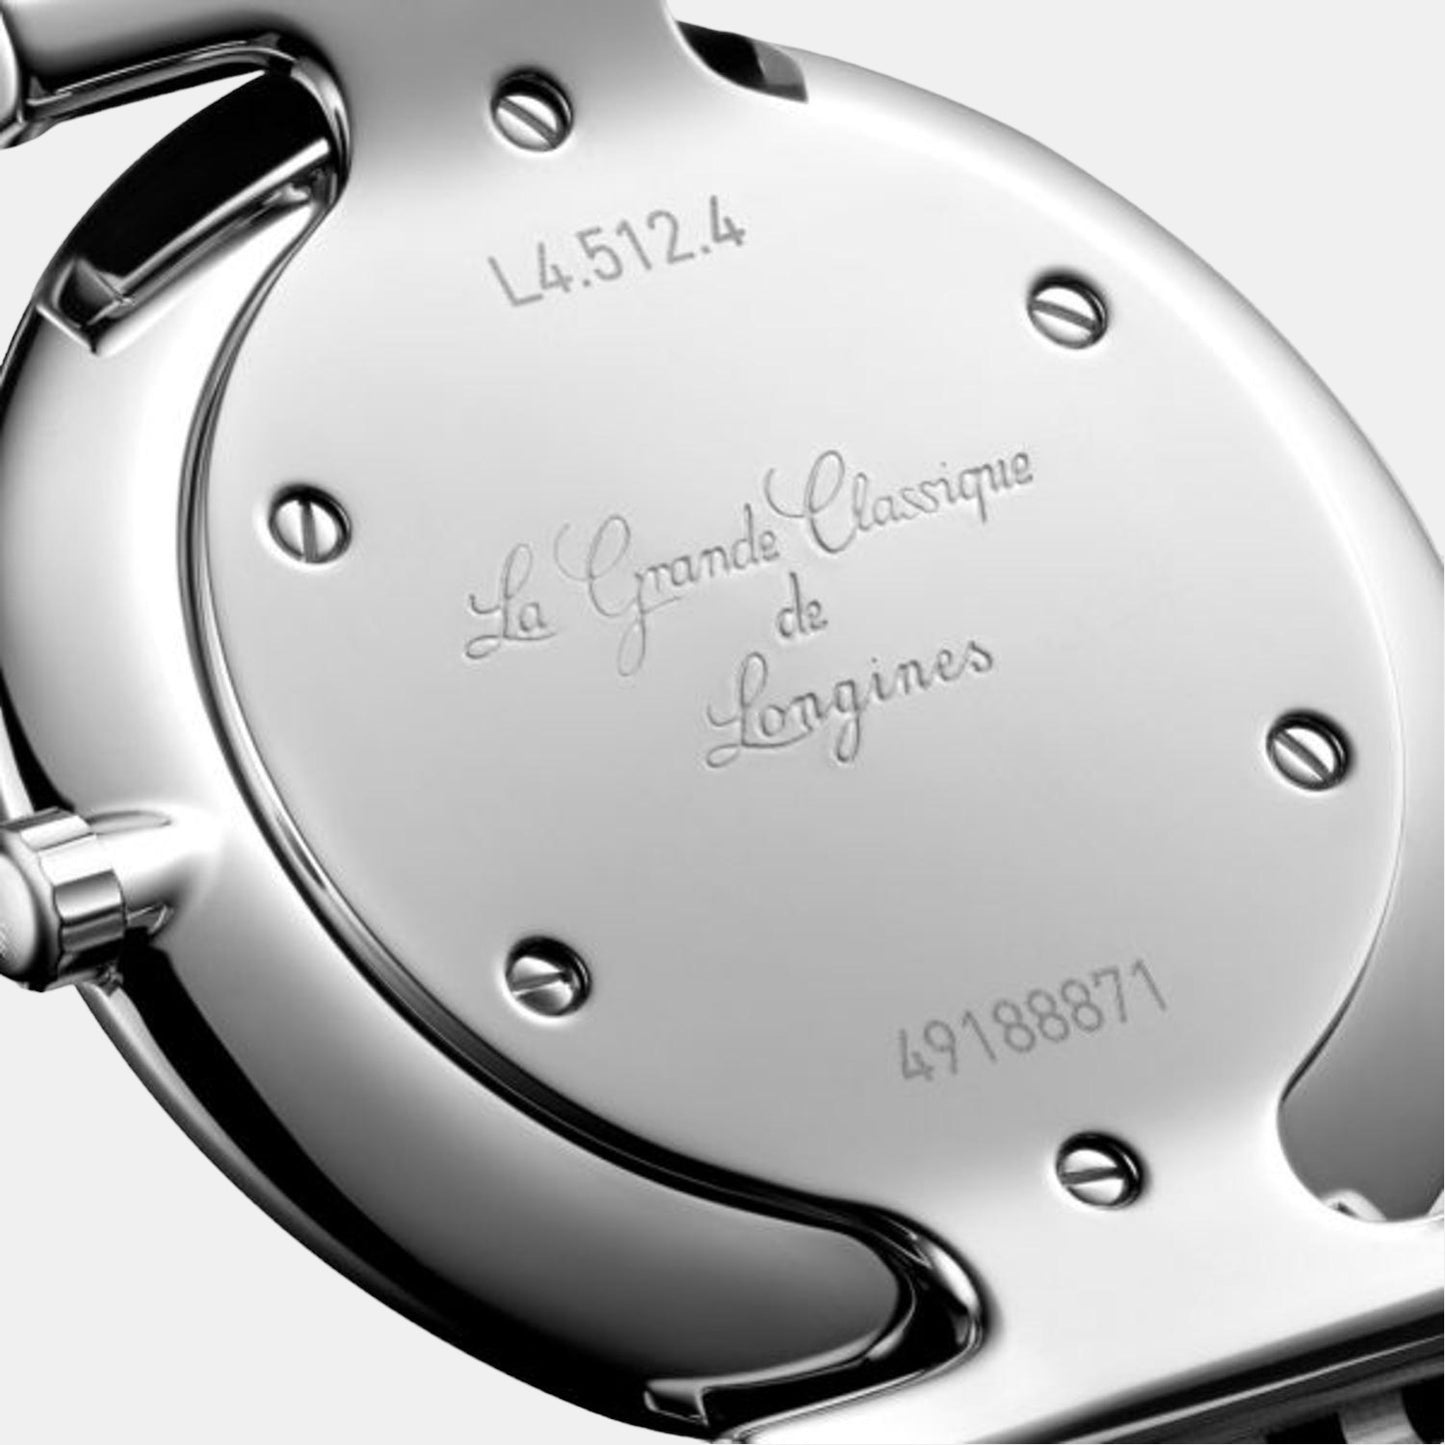 longines-stainless-steel-black-analog-women-watch-l45124586